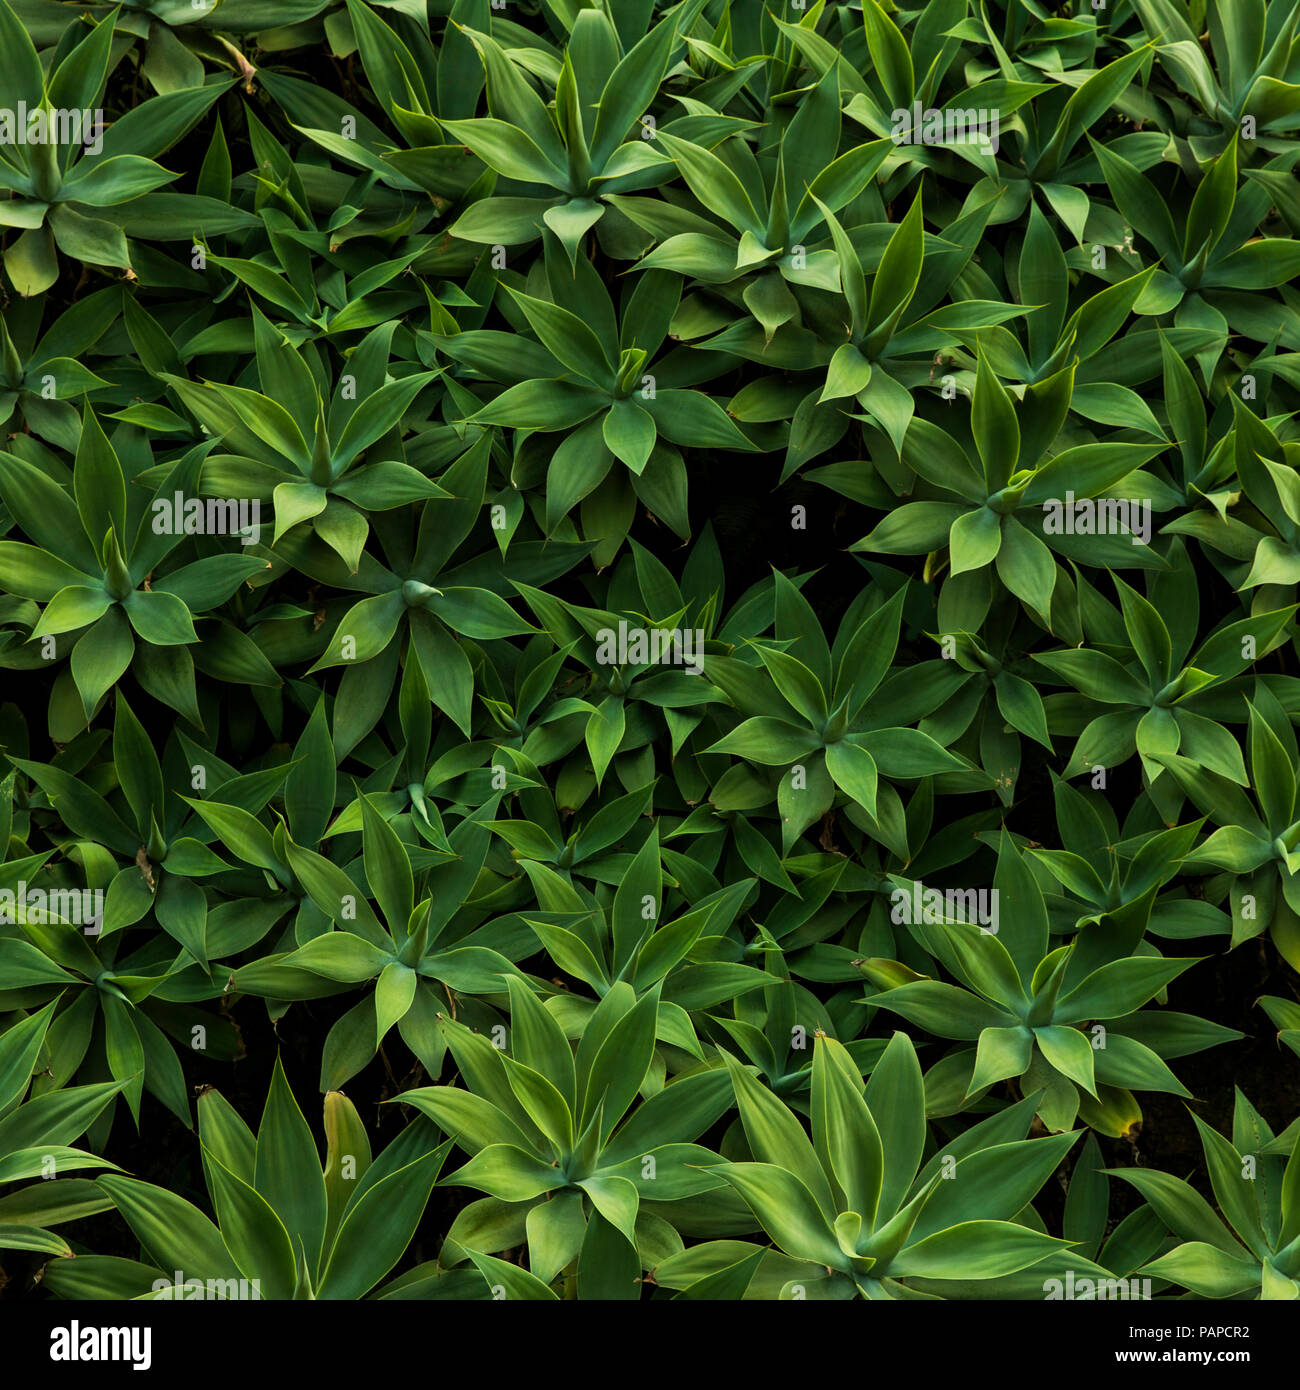 Lush foliage jungle background Stock Photo